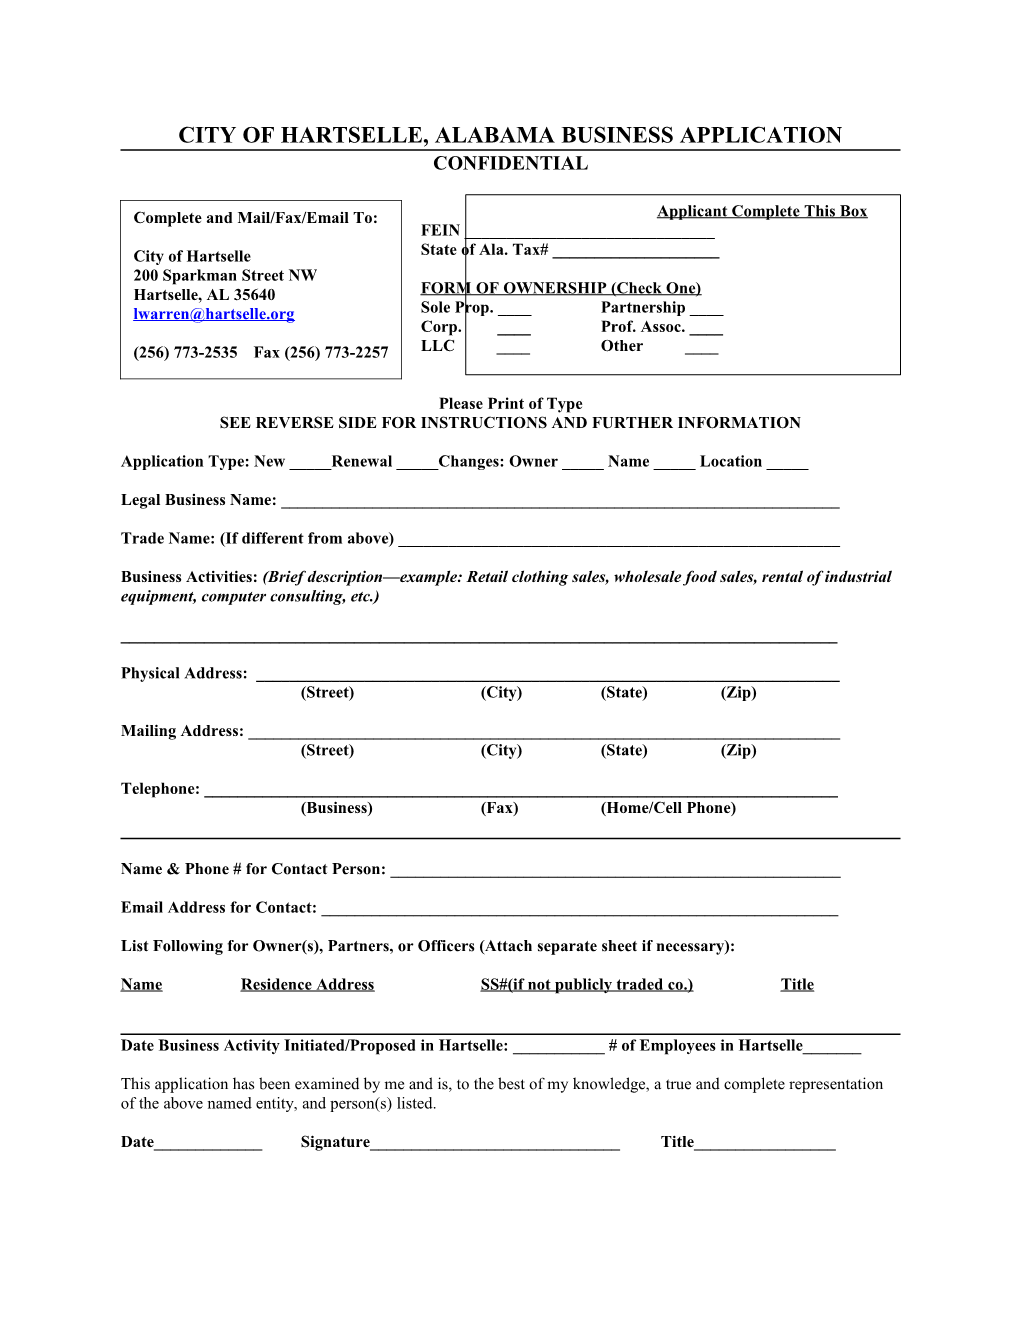 City of Hartselle, Alabama Business Application